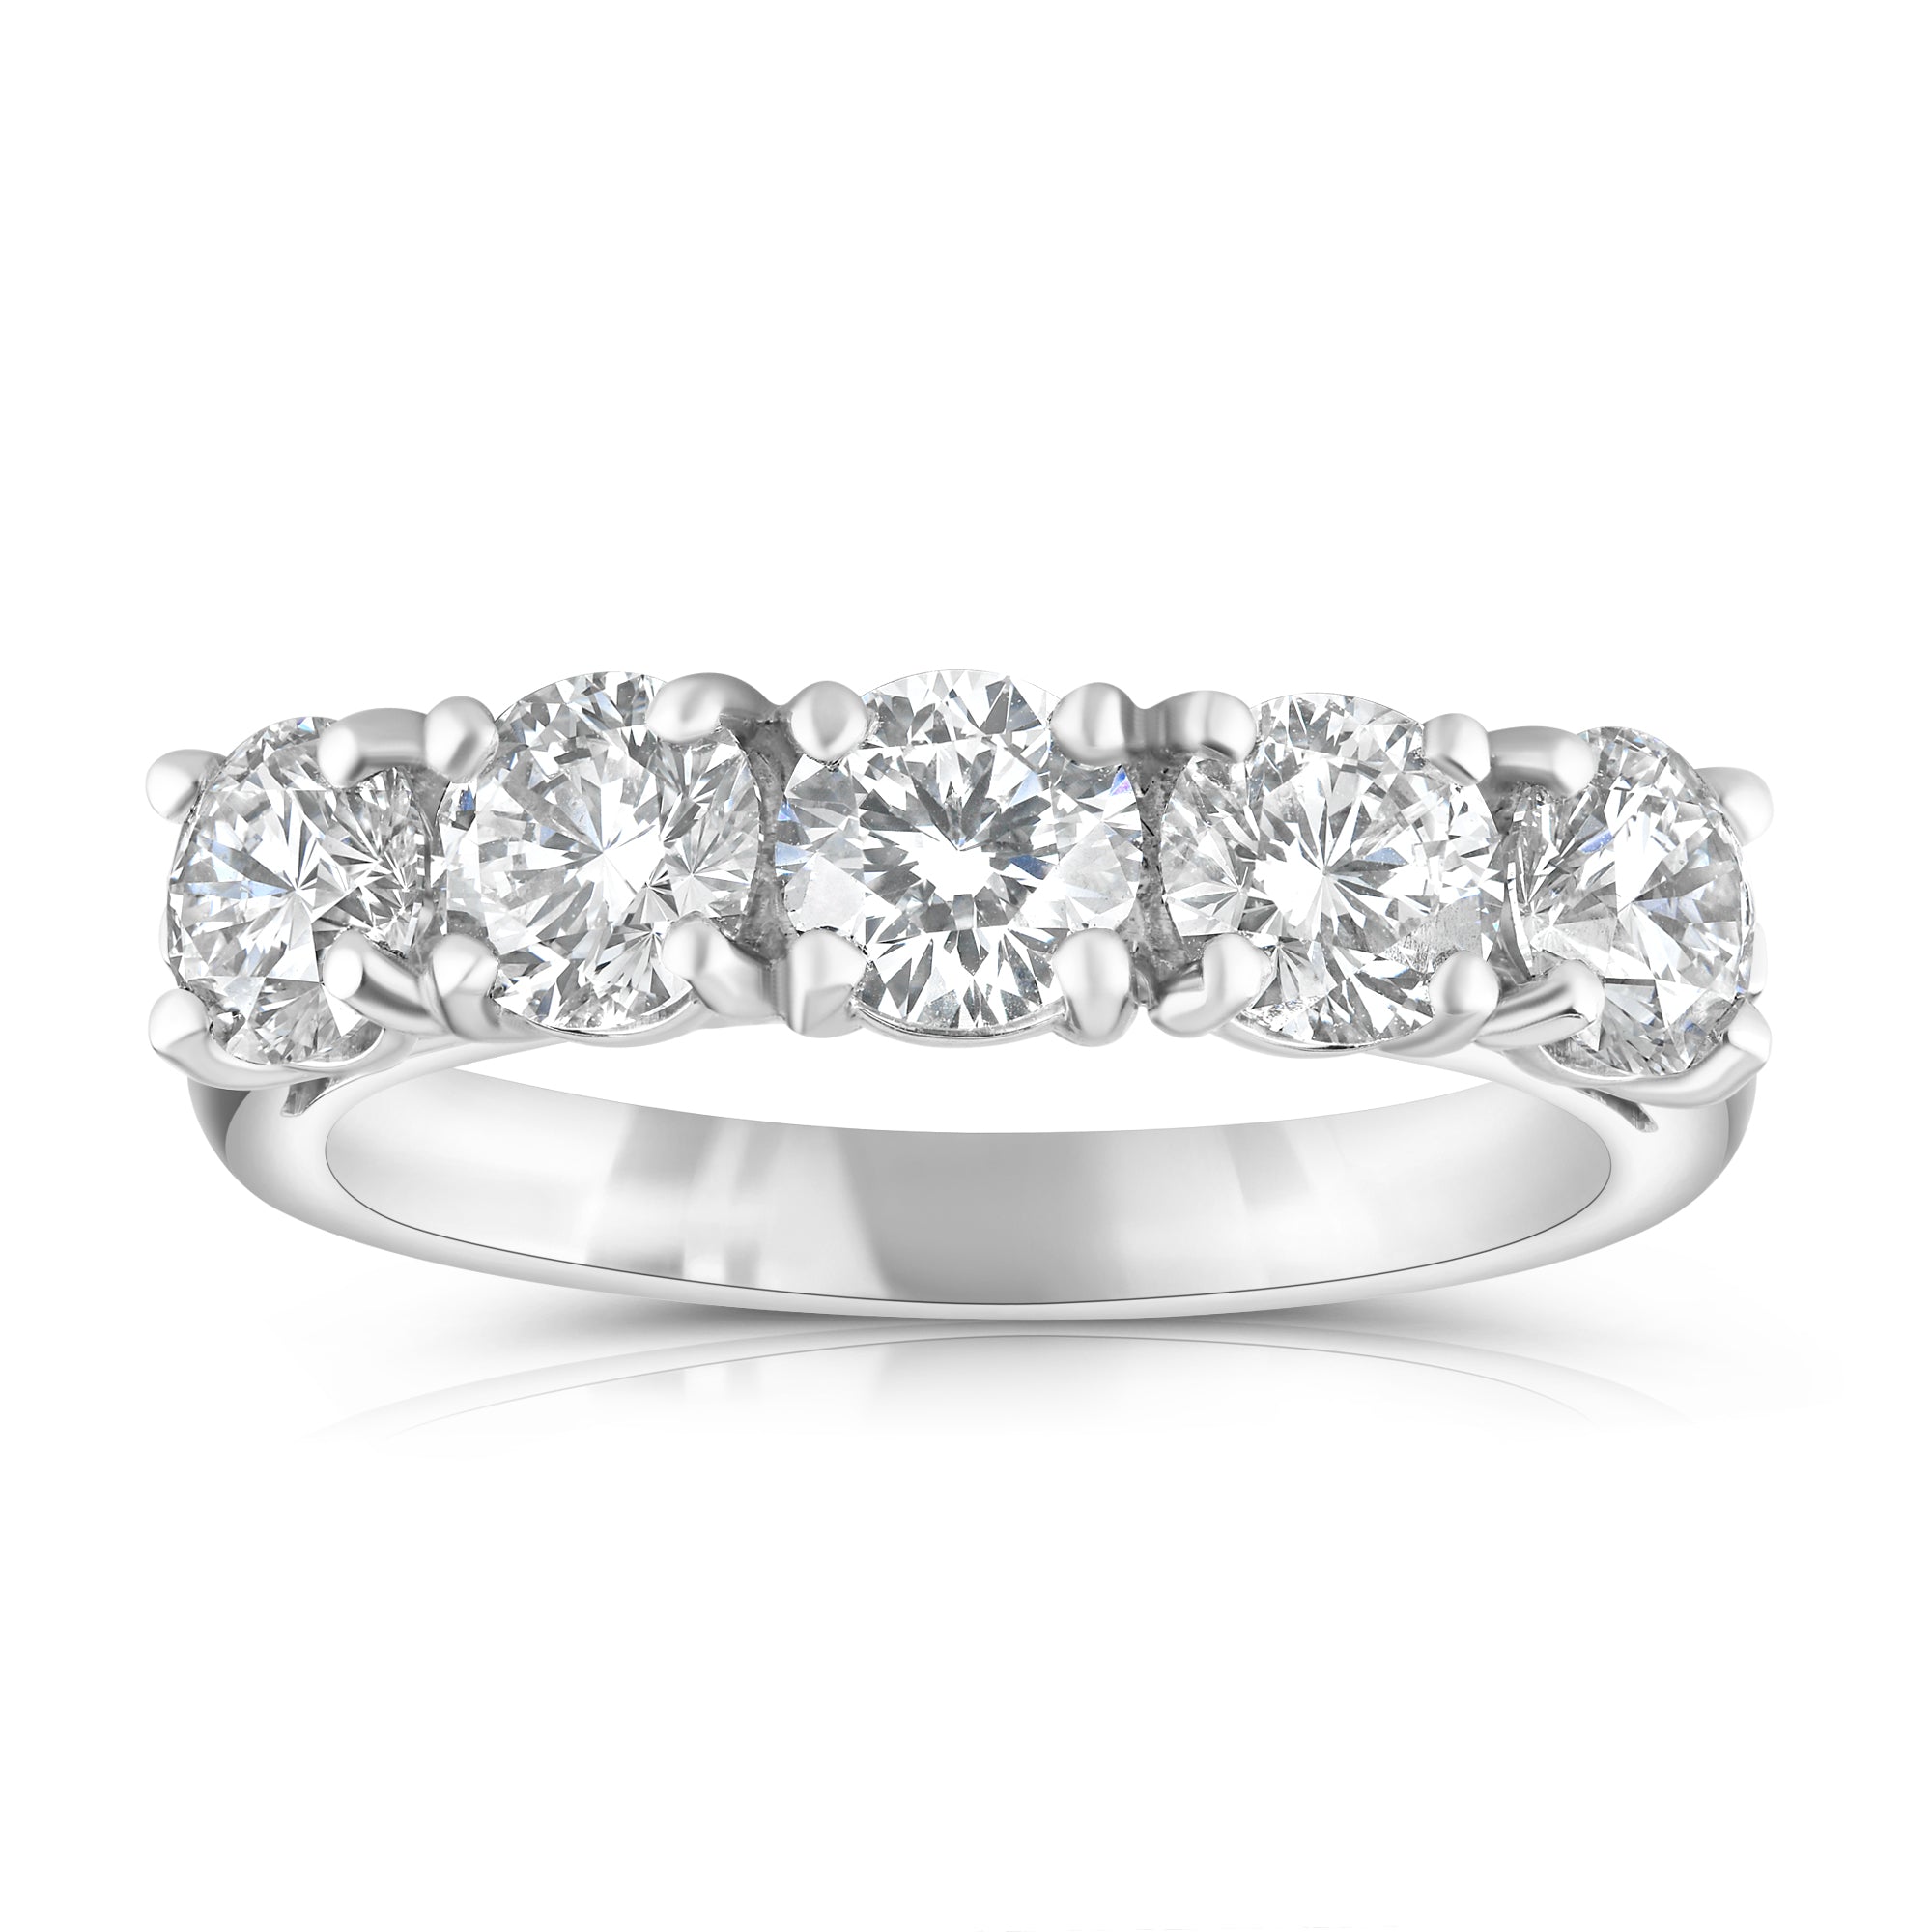 3.02ct 5 stone diamond ring, F-G colour, SI2 clarity set in platinum